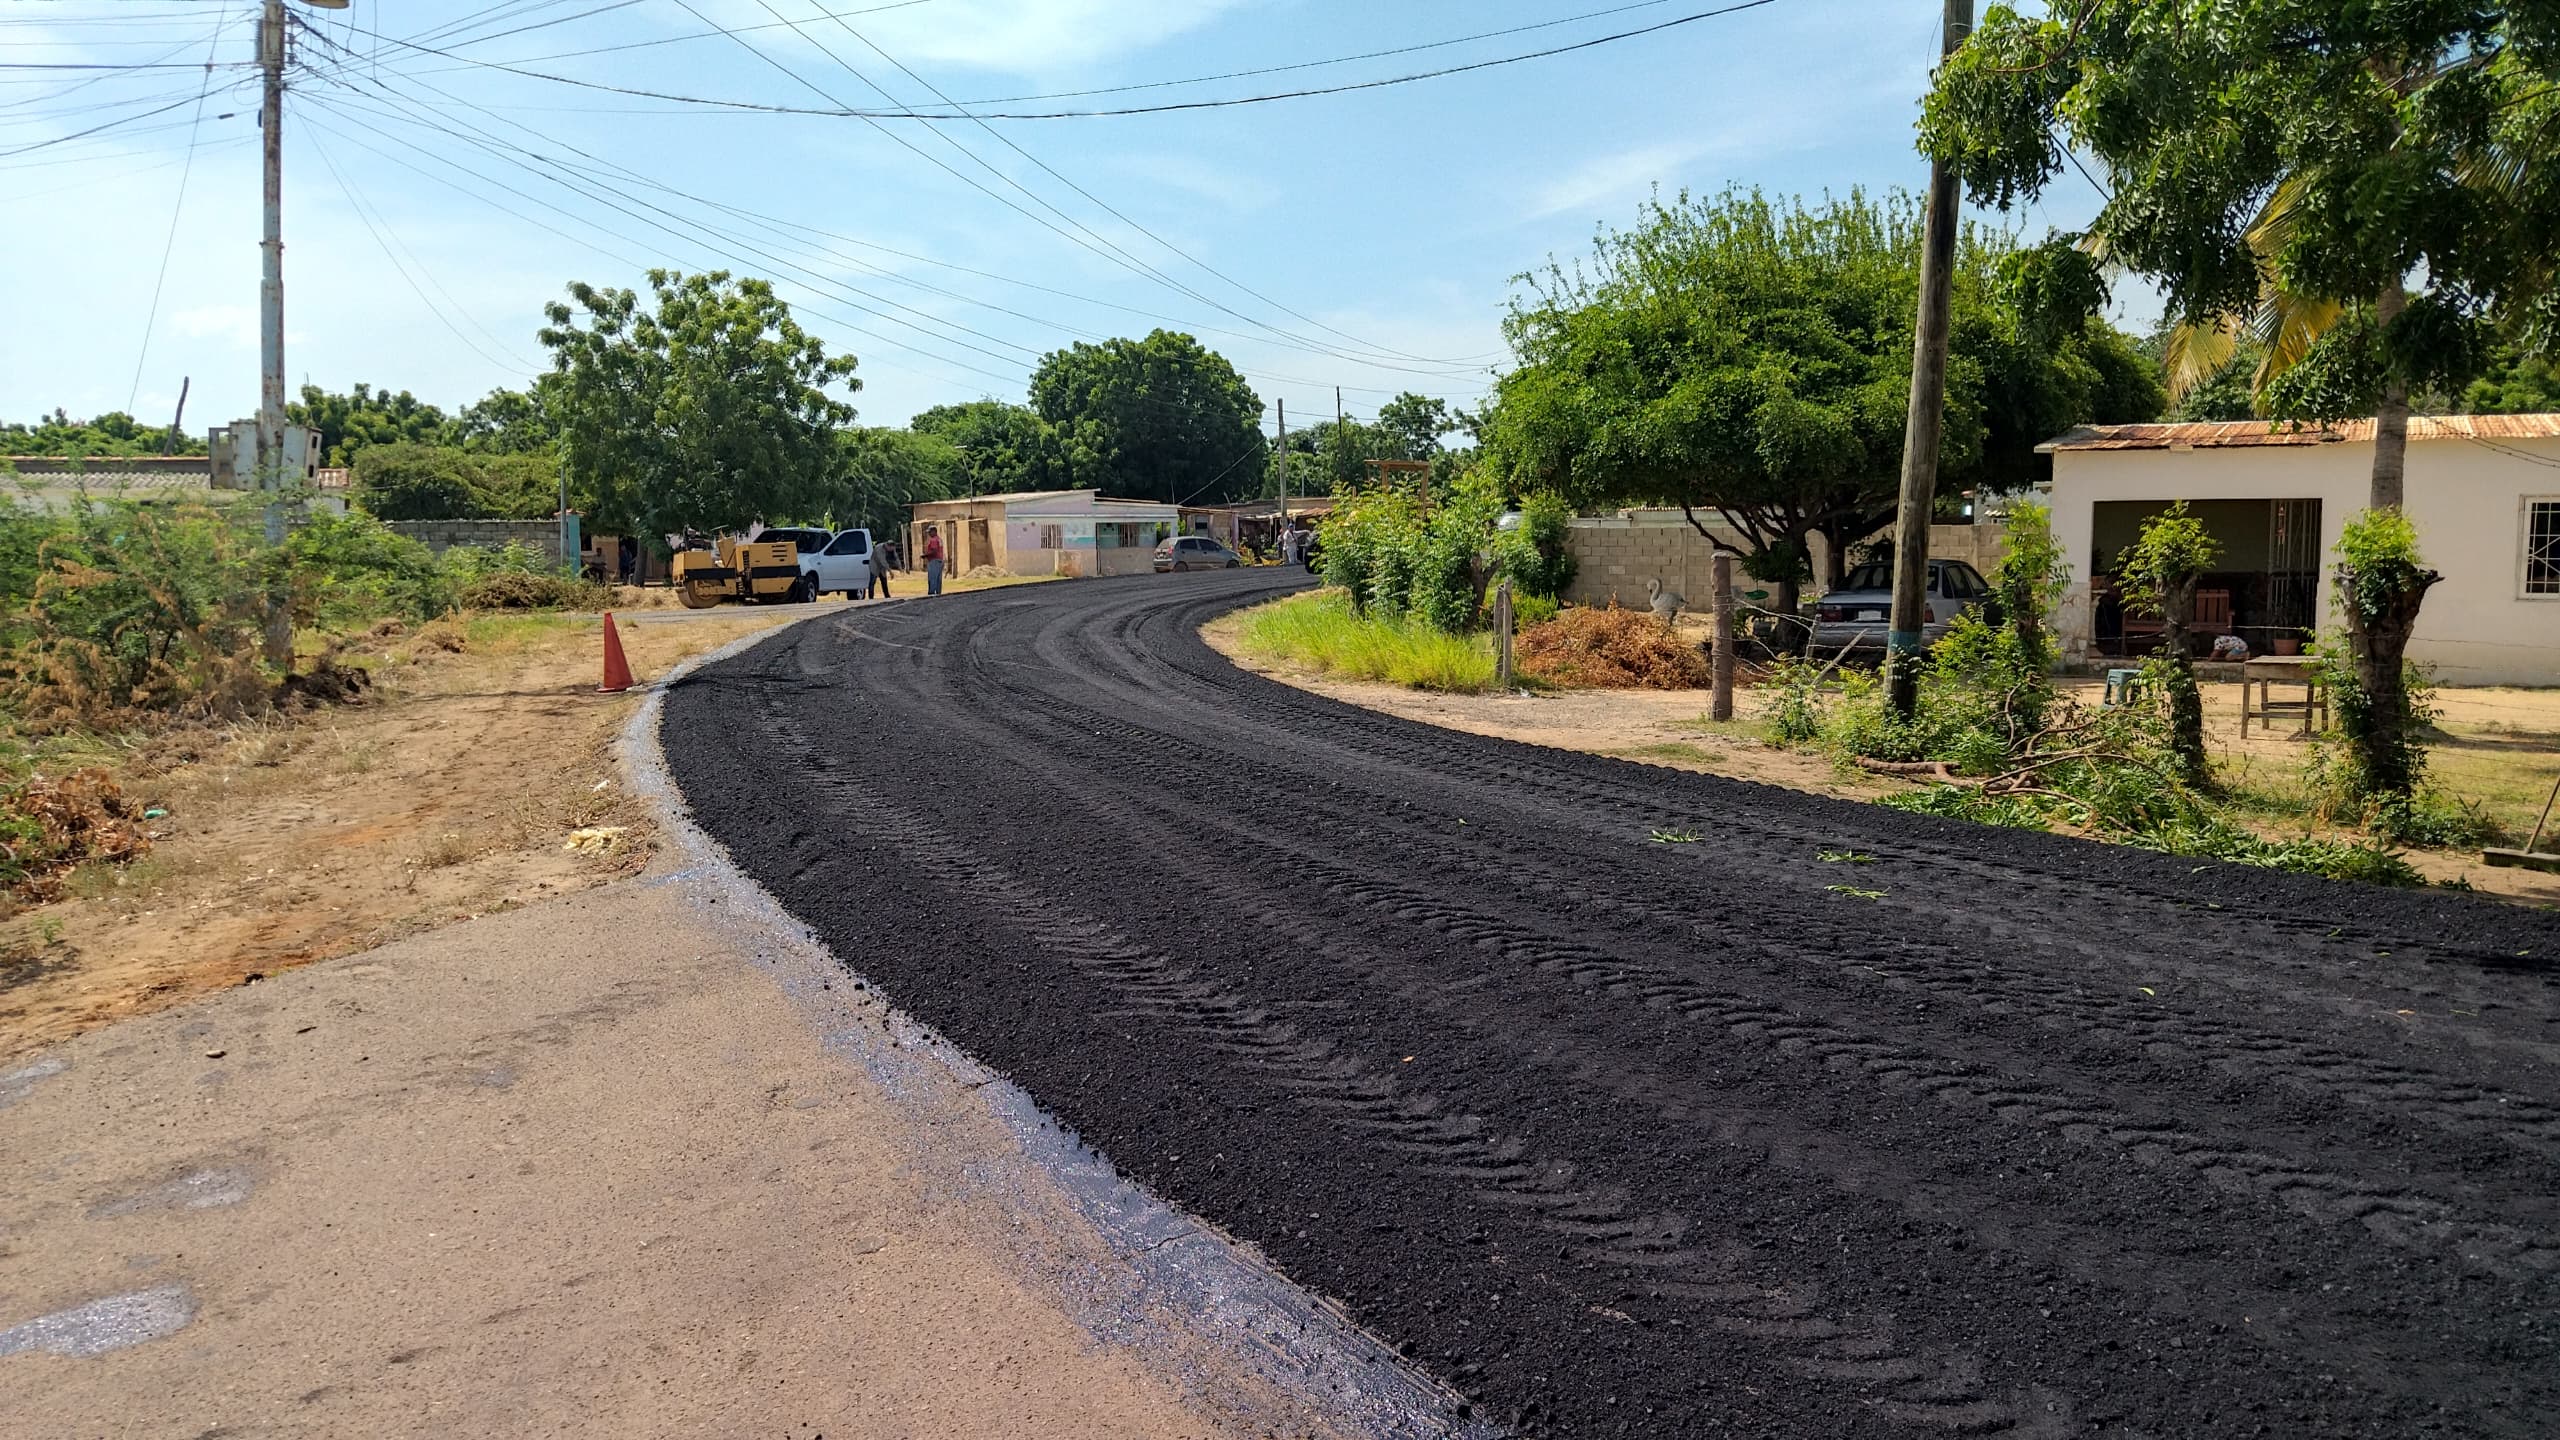 Plan de asfaltado se despliega en comunidades del municipio Mara